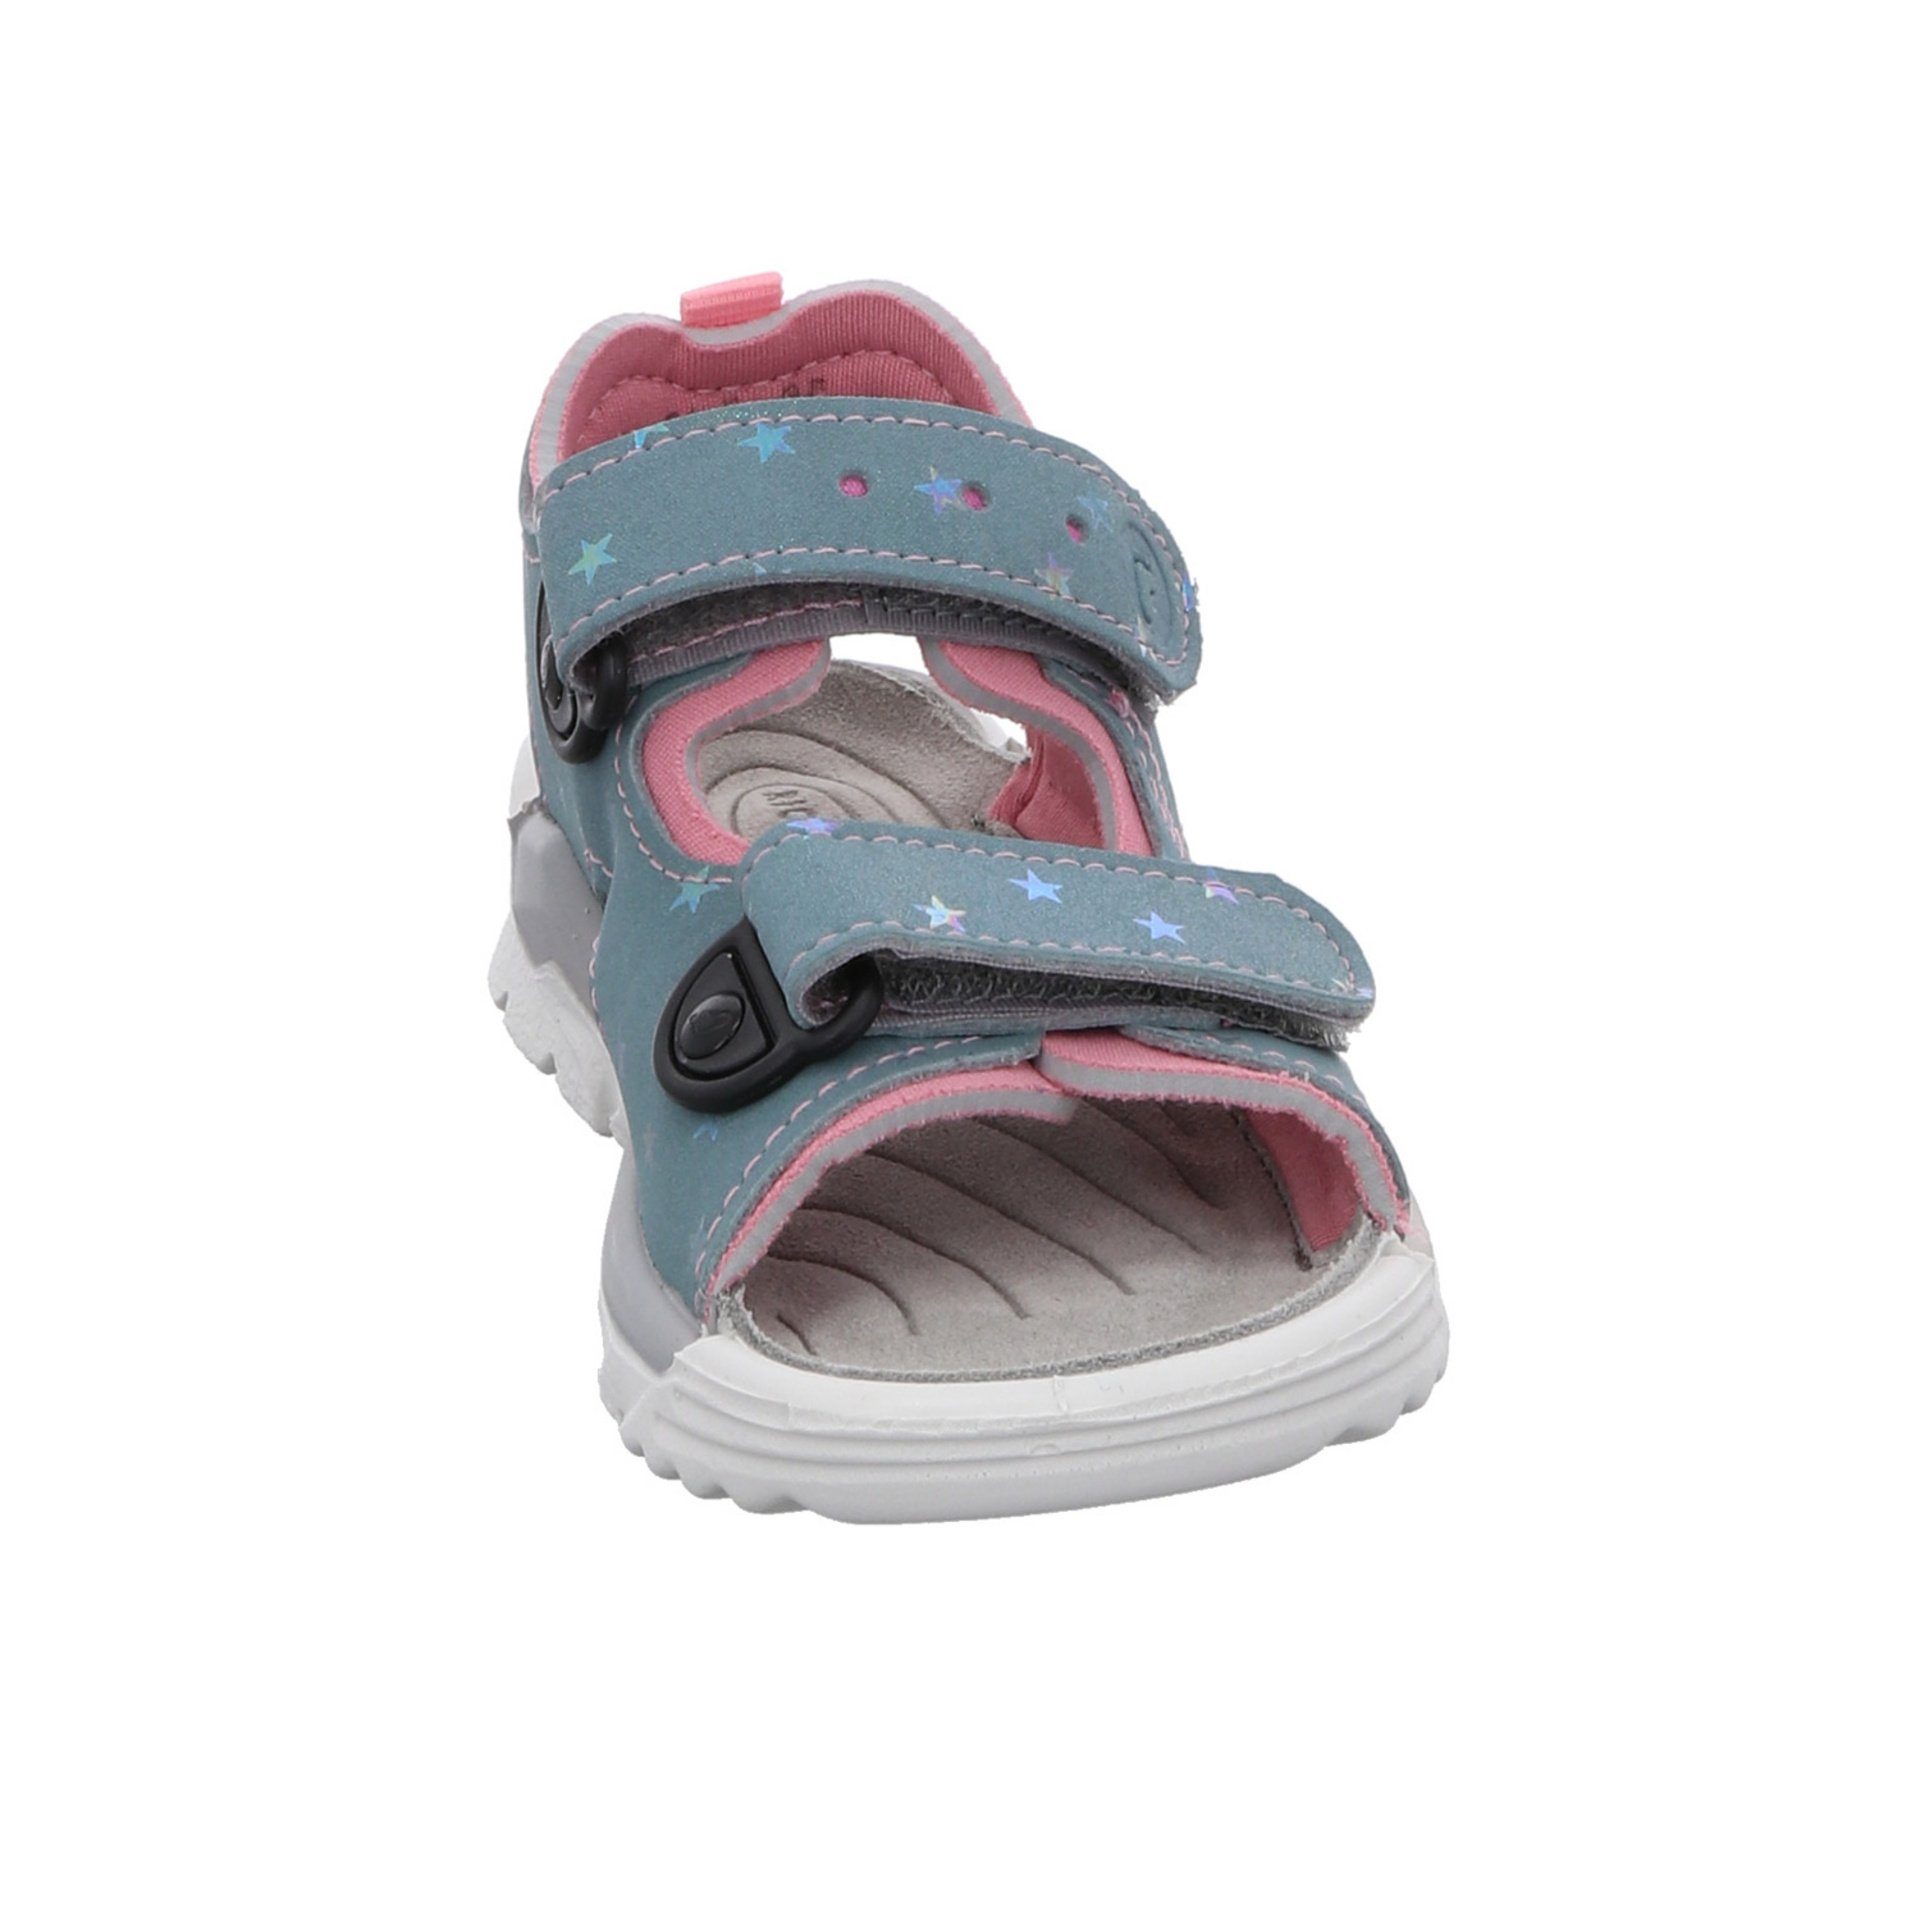 Schuhe Surf (130) arctic/mallow Kinderschuhe Mädchen Sandale Ricosta Sandalen Synthetikkombination Sandale